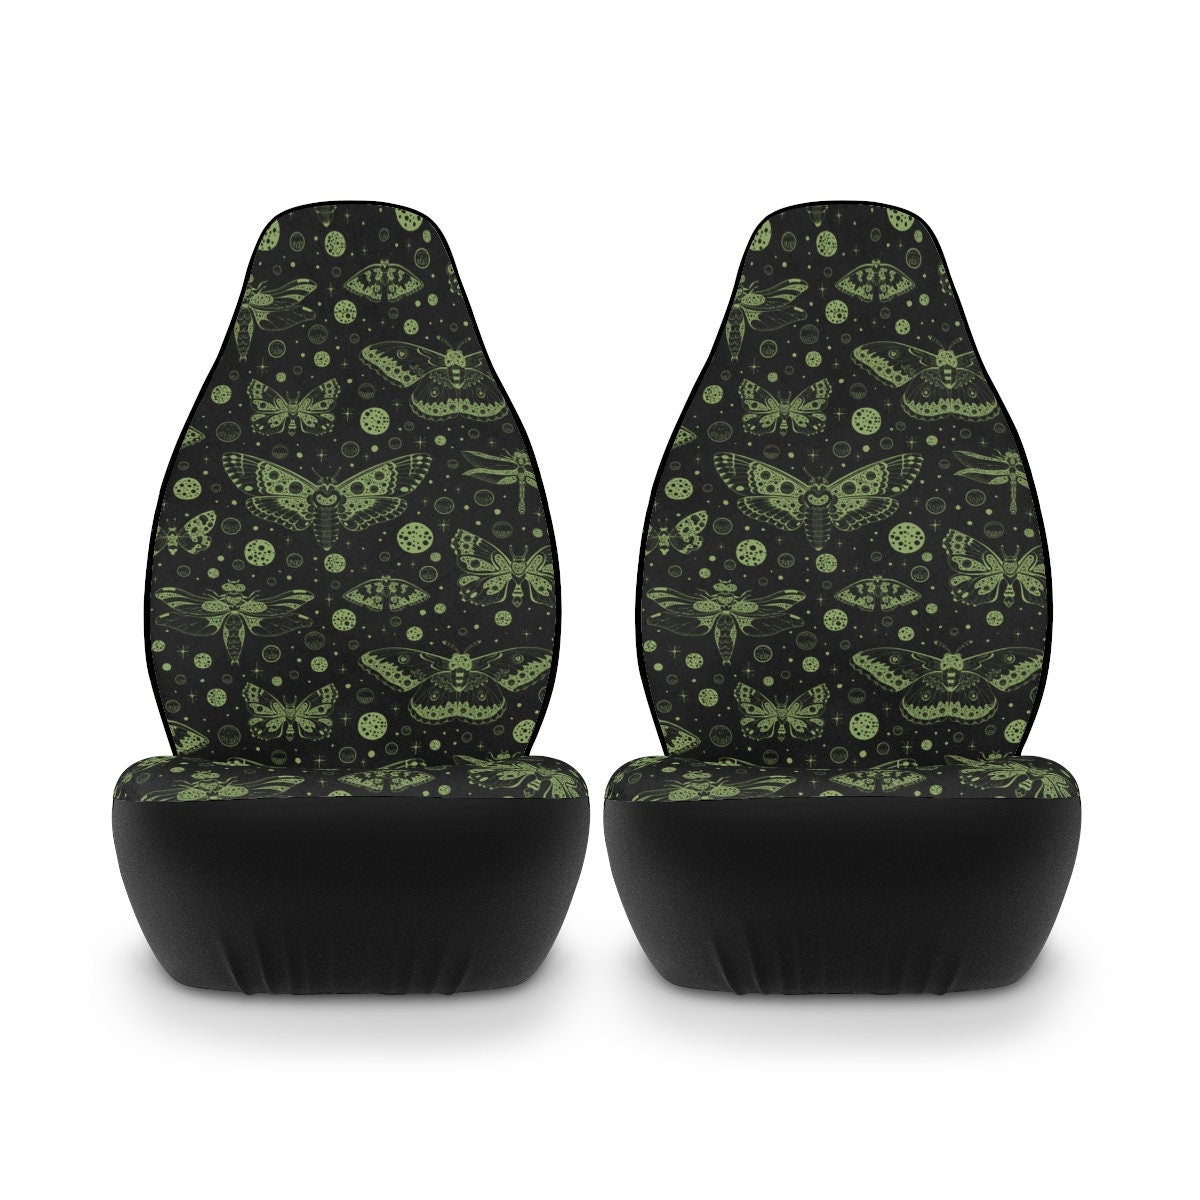 Car Seat Covers, Boho Sage Green Cute Car Accessories for Women